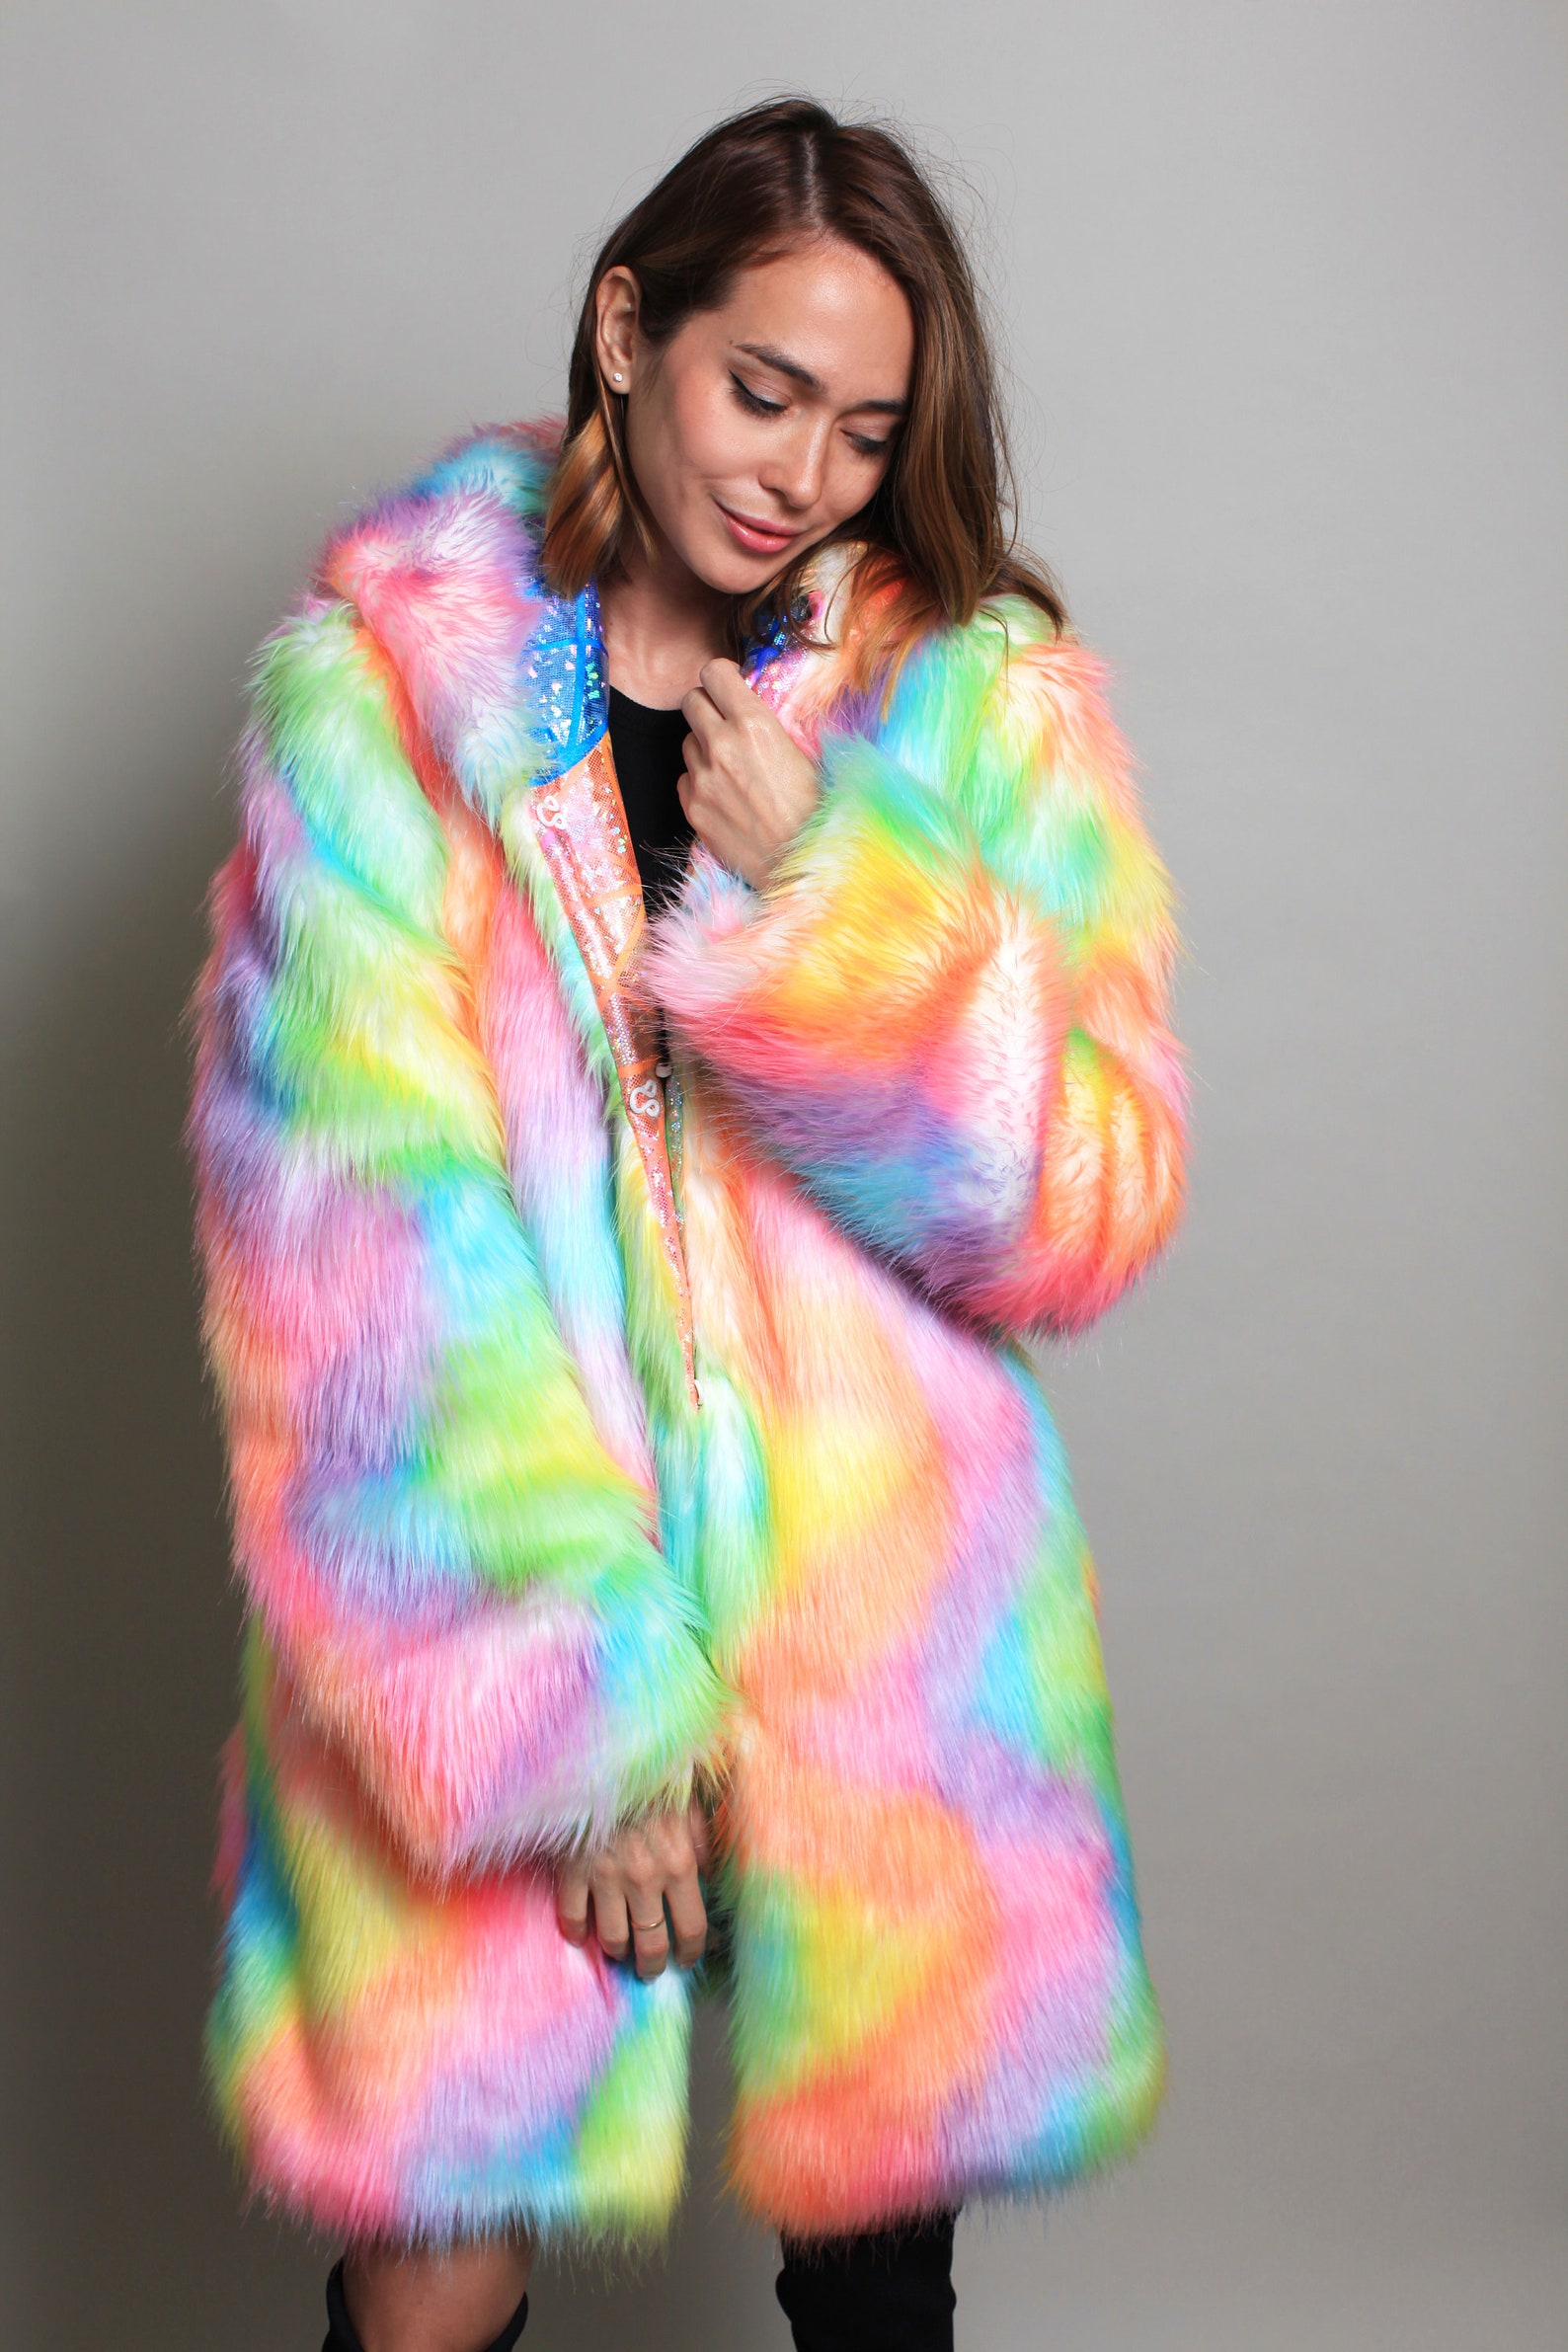 Glossy Rainbow Festival Fur Coat Faux Boho Reversible Cape | Etsy